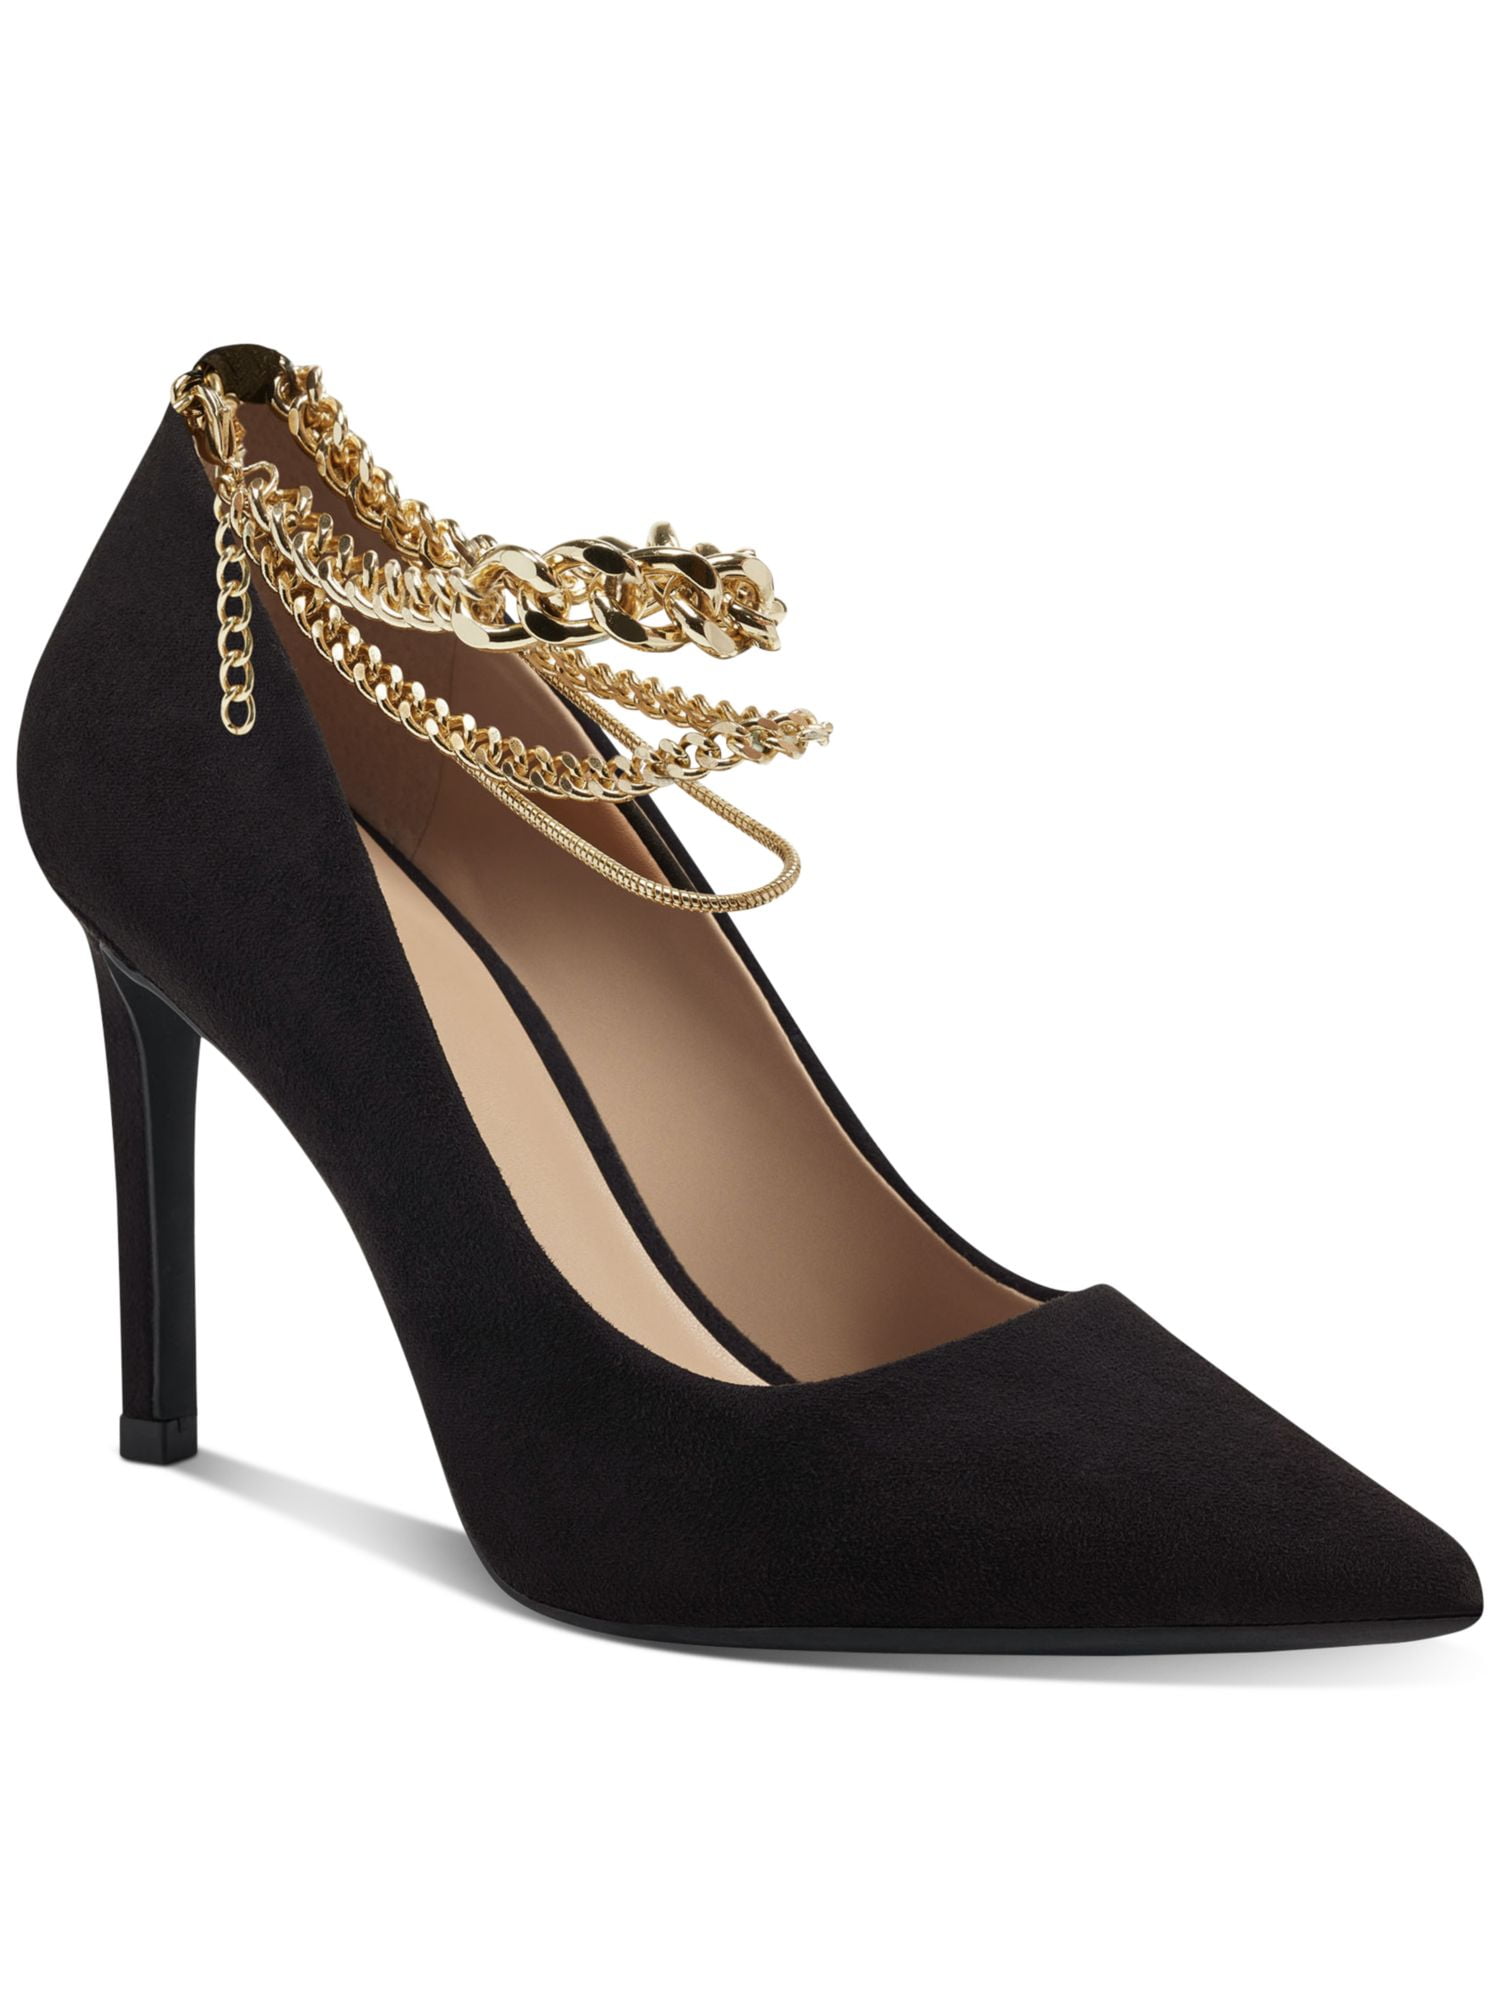 Women's Gold Letter Love Heel Sandals | Sandals heels, High heel sandals,  Gold wedge heels